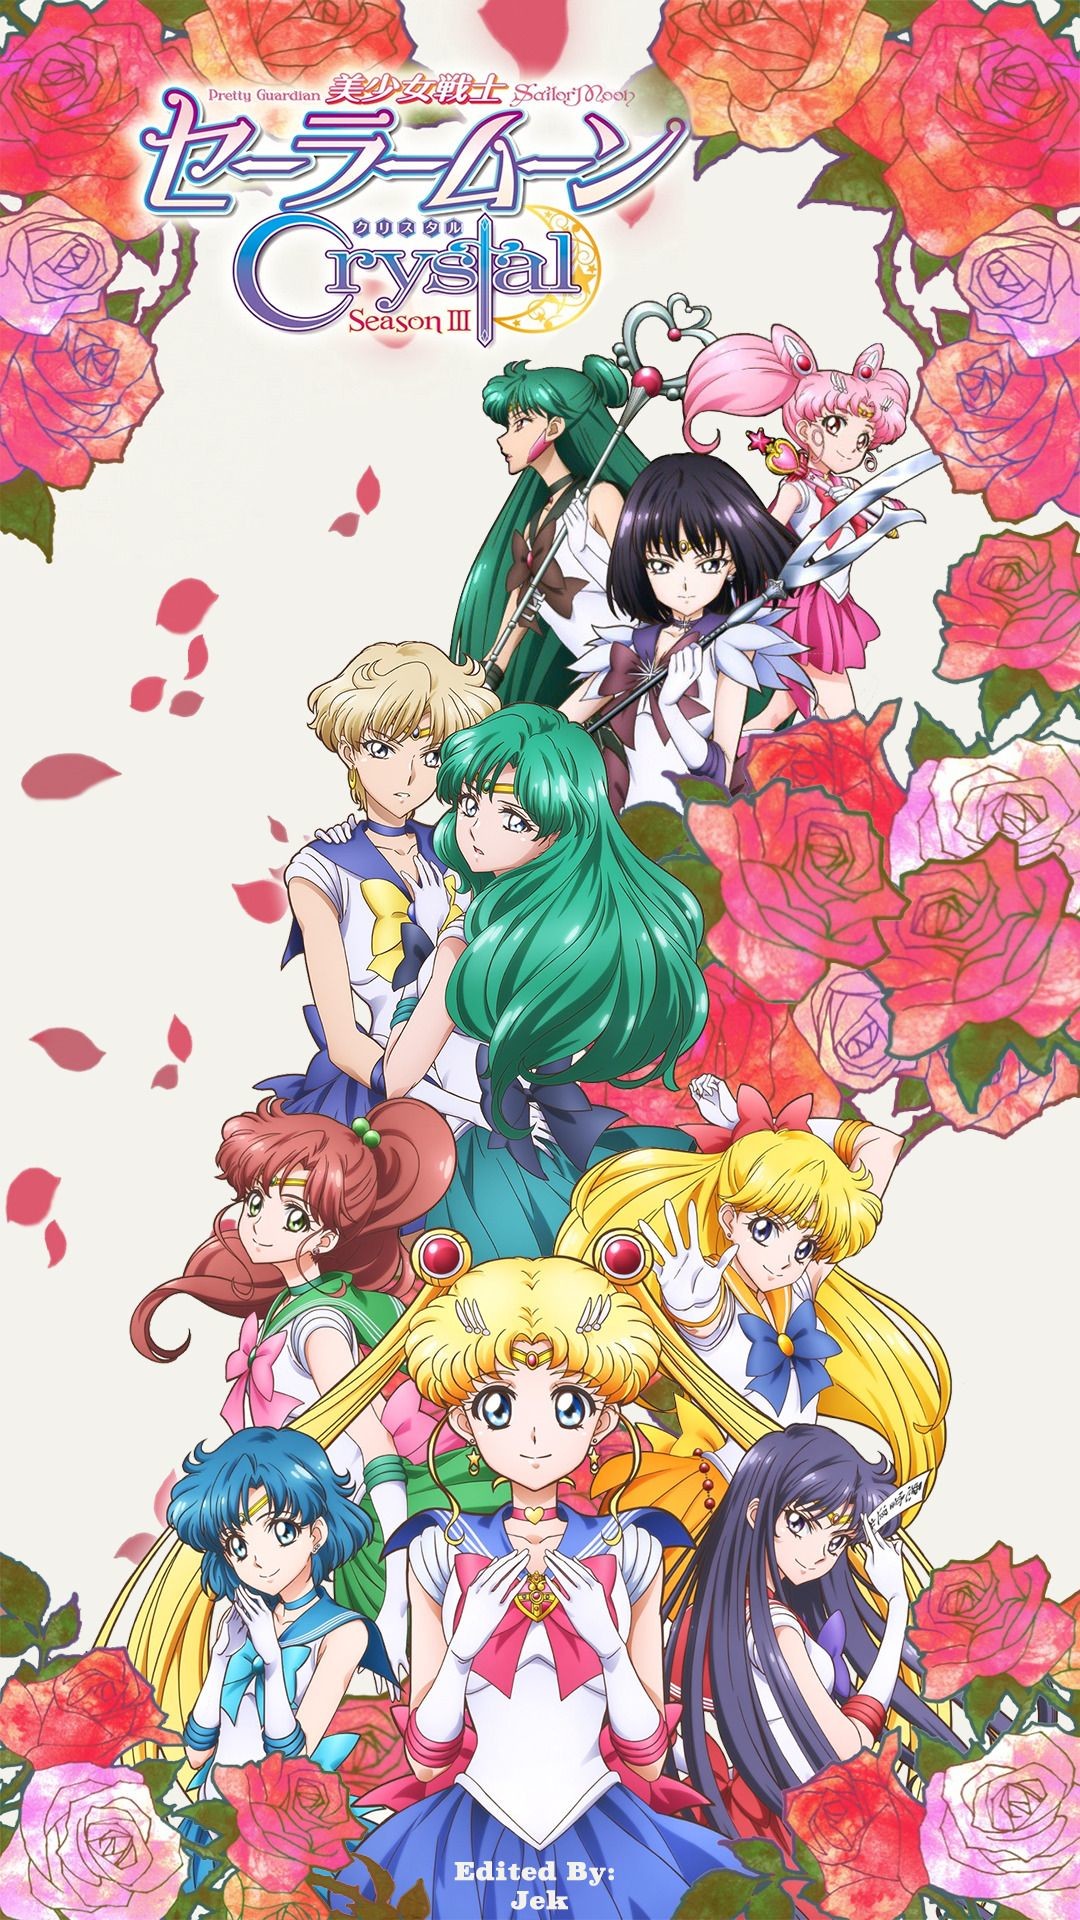 Iphone Sailor Moon Wallpaper 75 Images